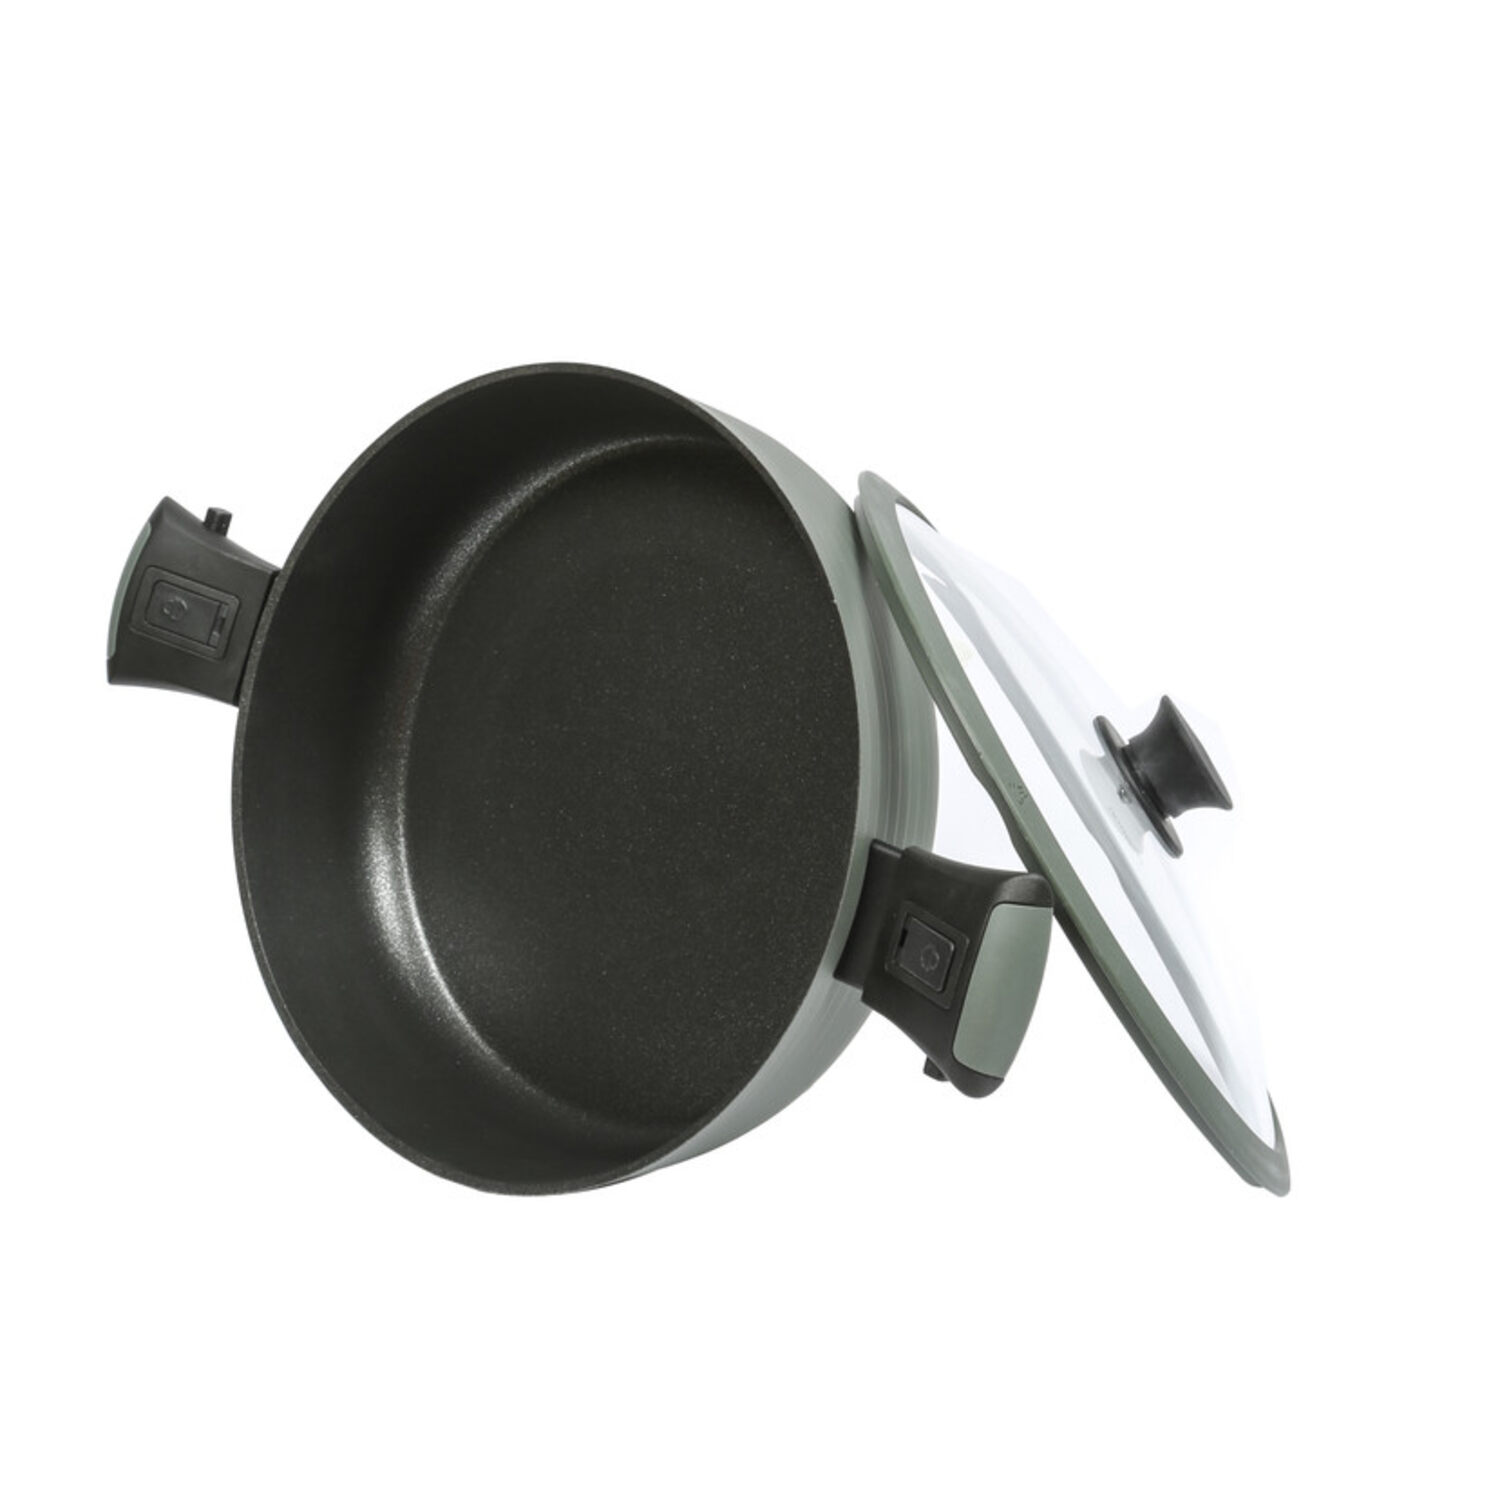 Fissman 9 Pcs Cookware Set - Non Stick Aluminium With Detachable Handles - Oven Safe Xylanplus Coating, Casserole, Frying Pan, Shallow Pot